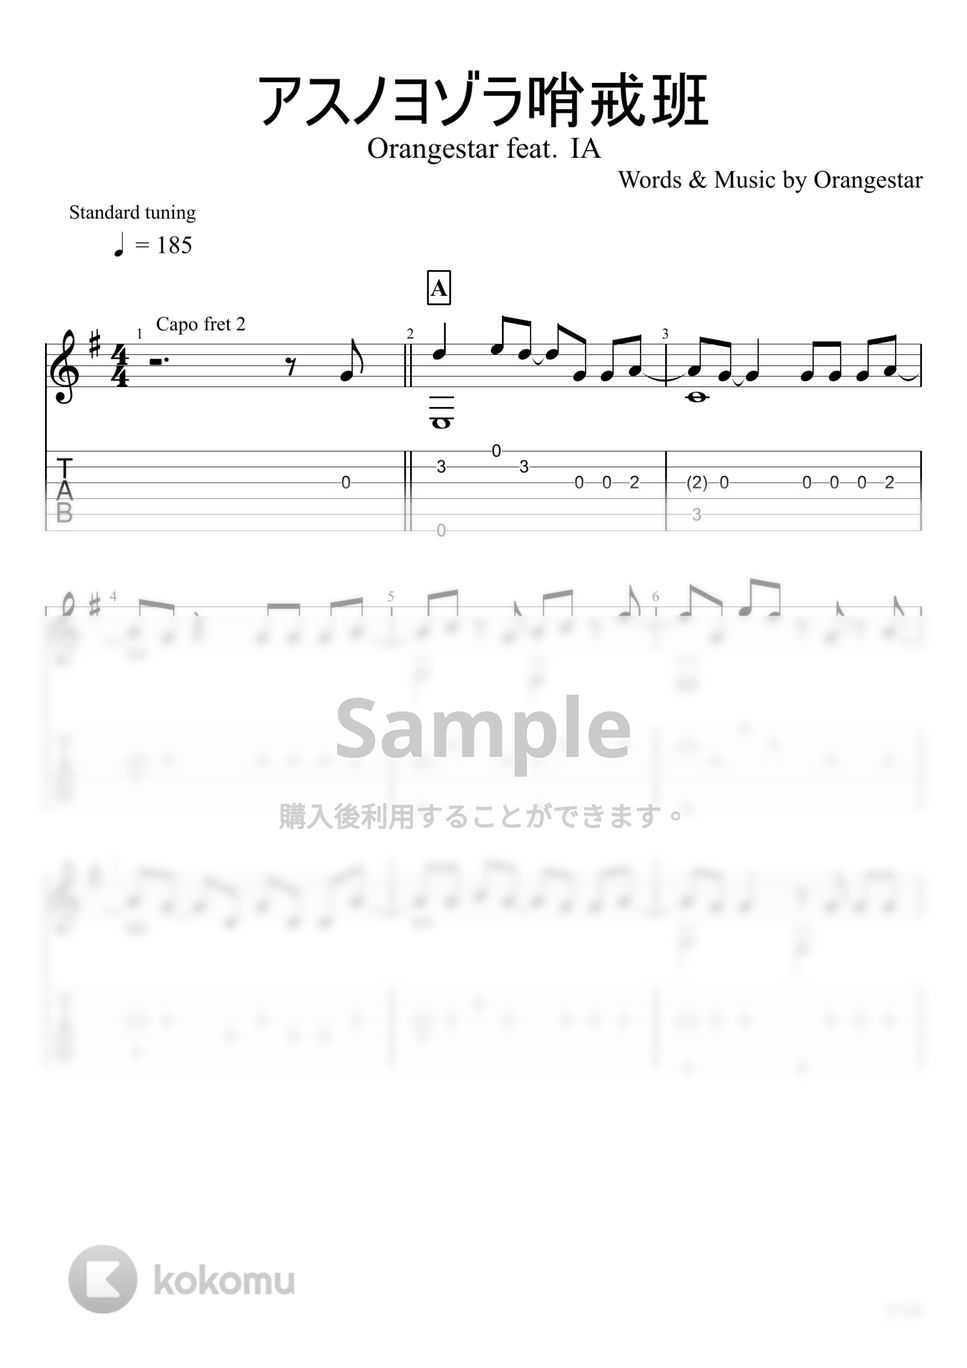 Orangestar - アスノヨゾラ哨戒班 (ソロギター) by u3danchou